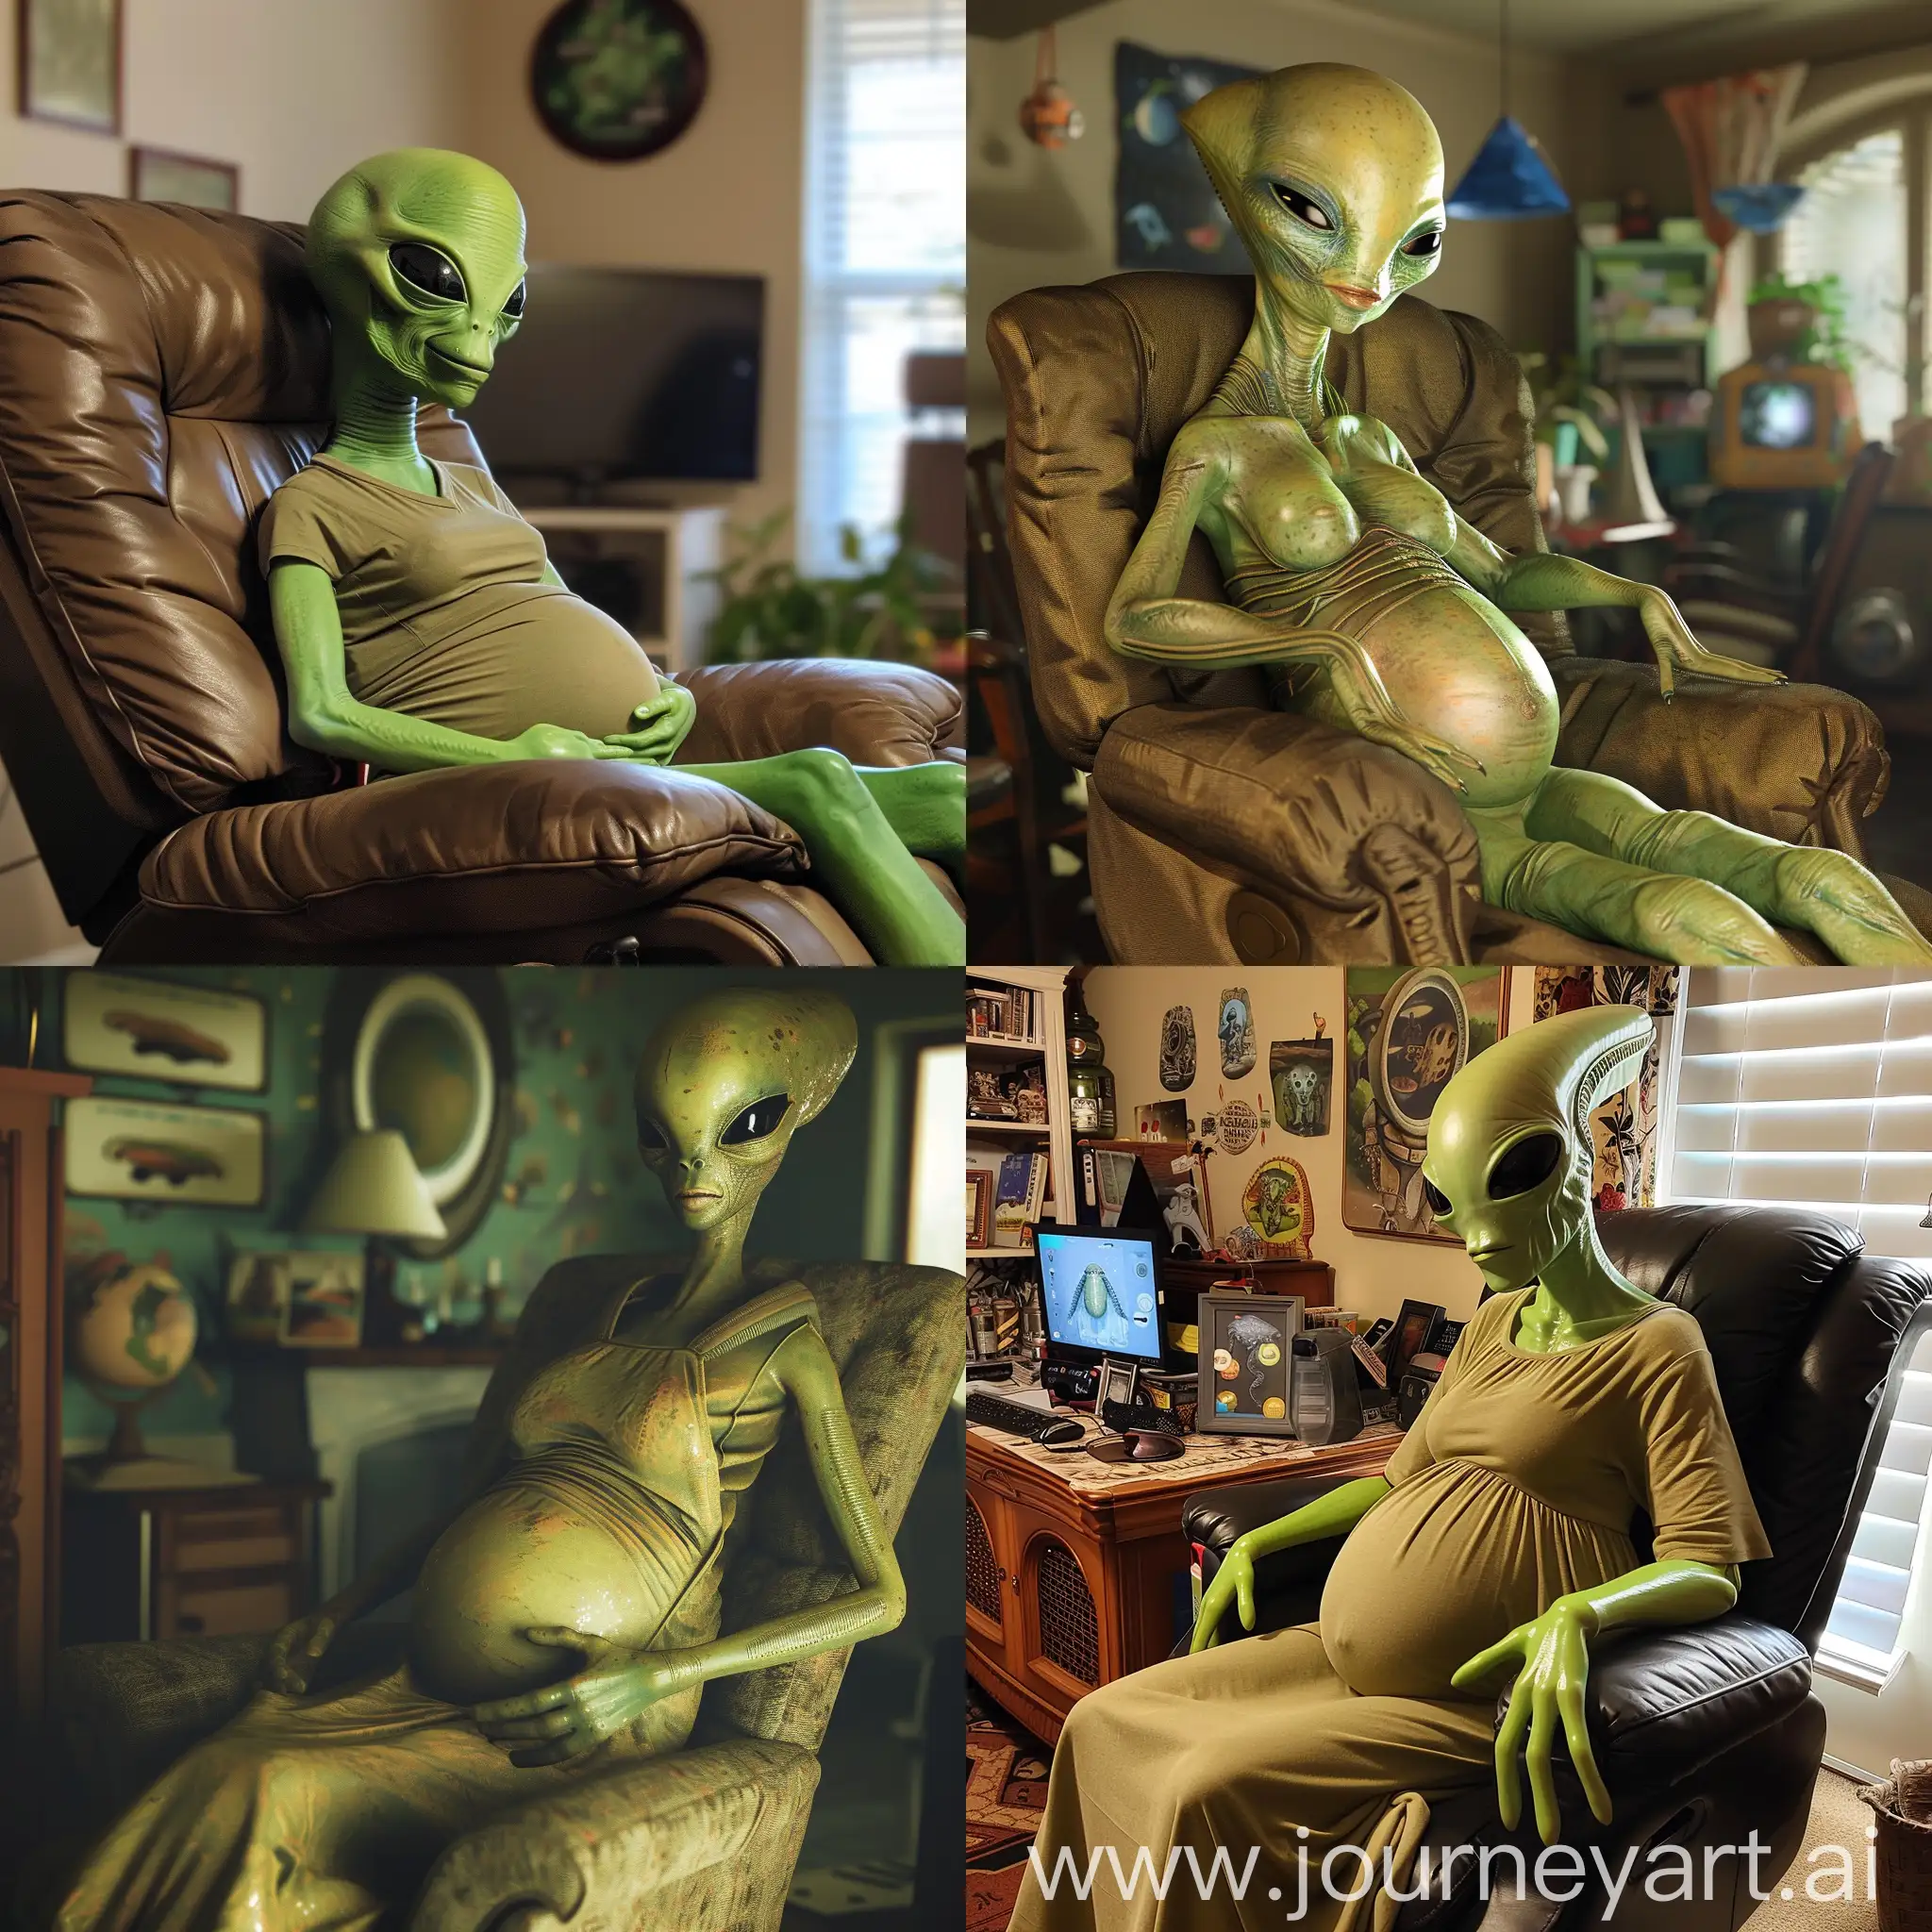 Pregnant-Green-Alien-Relaxing-in-Recliner-Chair